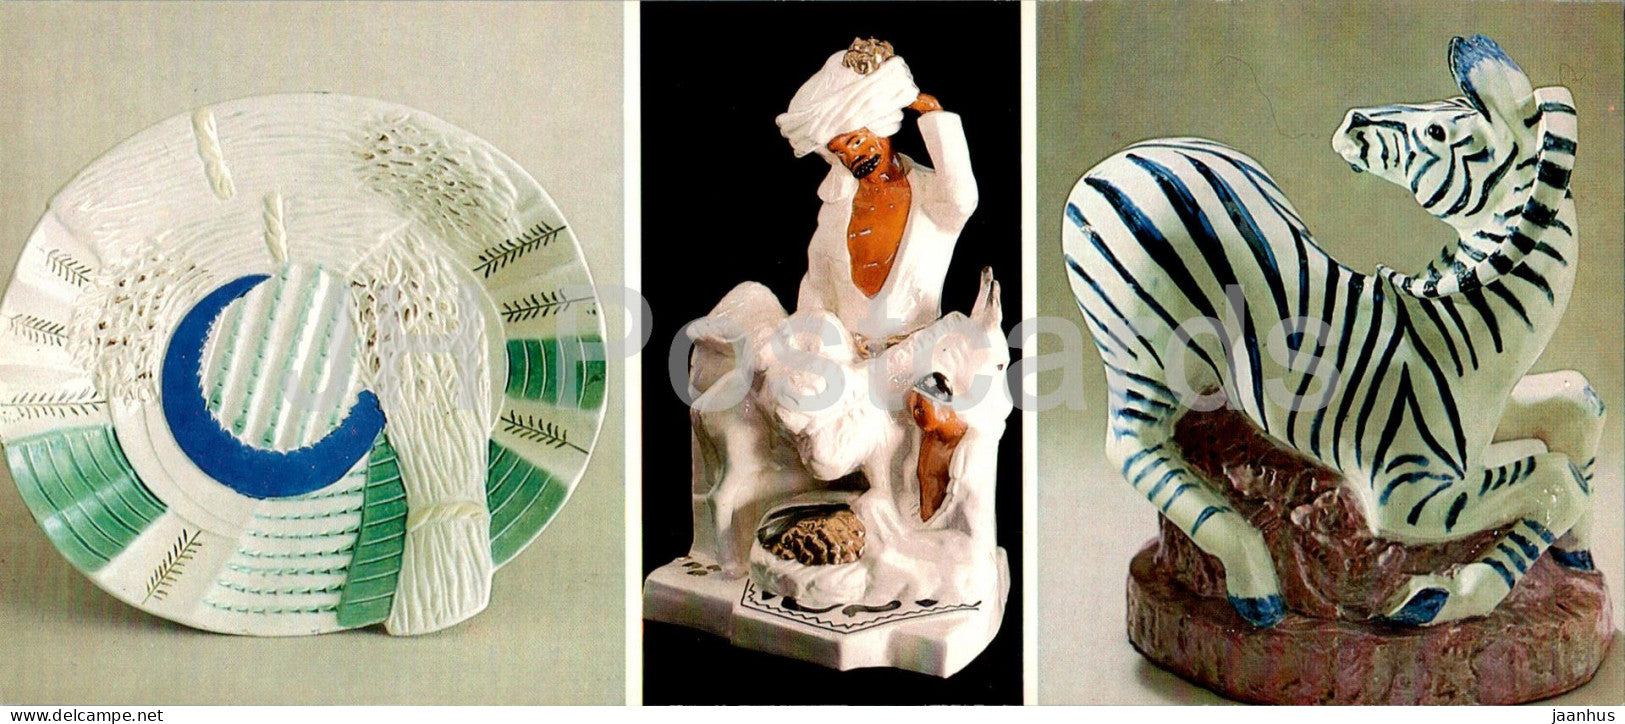 biscuit basket - zebra figurine - porcelain and faience - applied art - Russian art - 1984 - Russia USSR - unused - JH Postcards